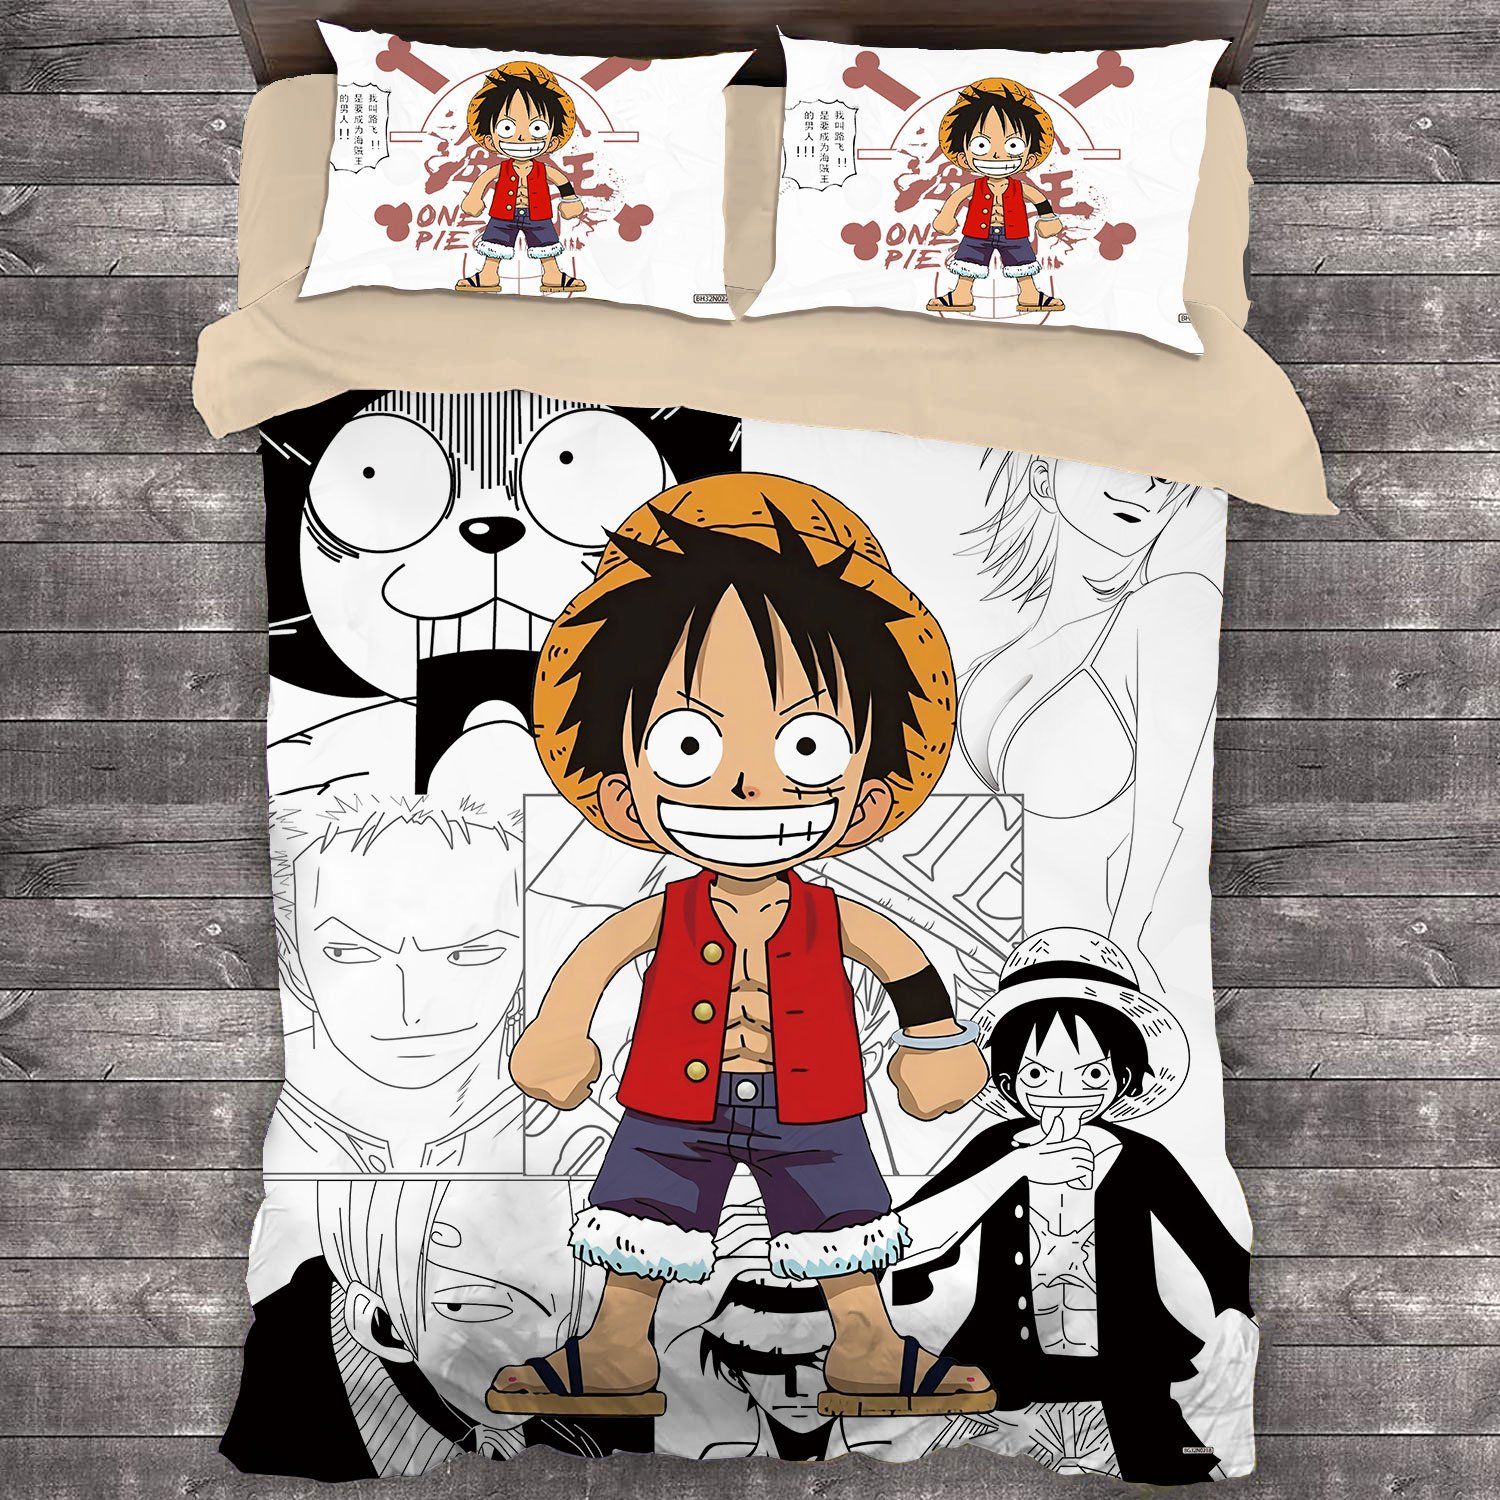 Comic One Piece 4 Duvet Cover Quilt Cover Pillowcase Bedding